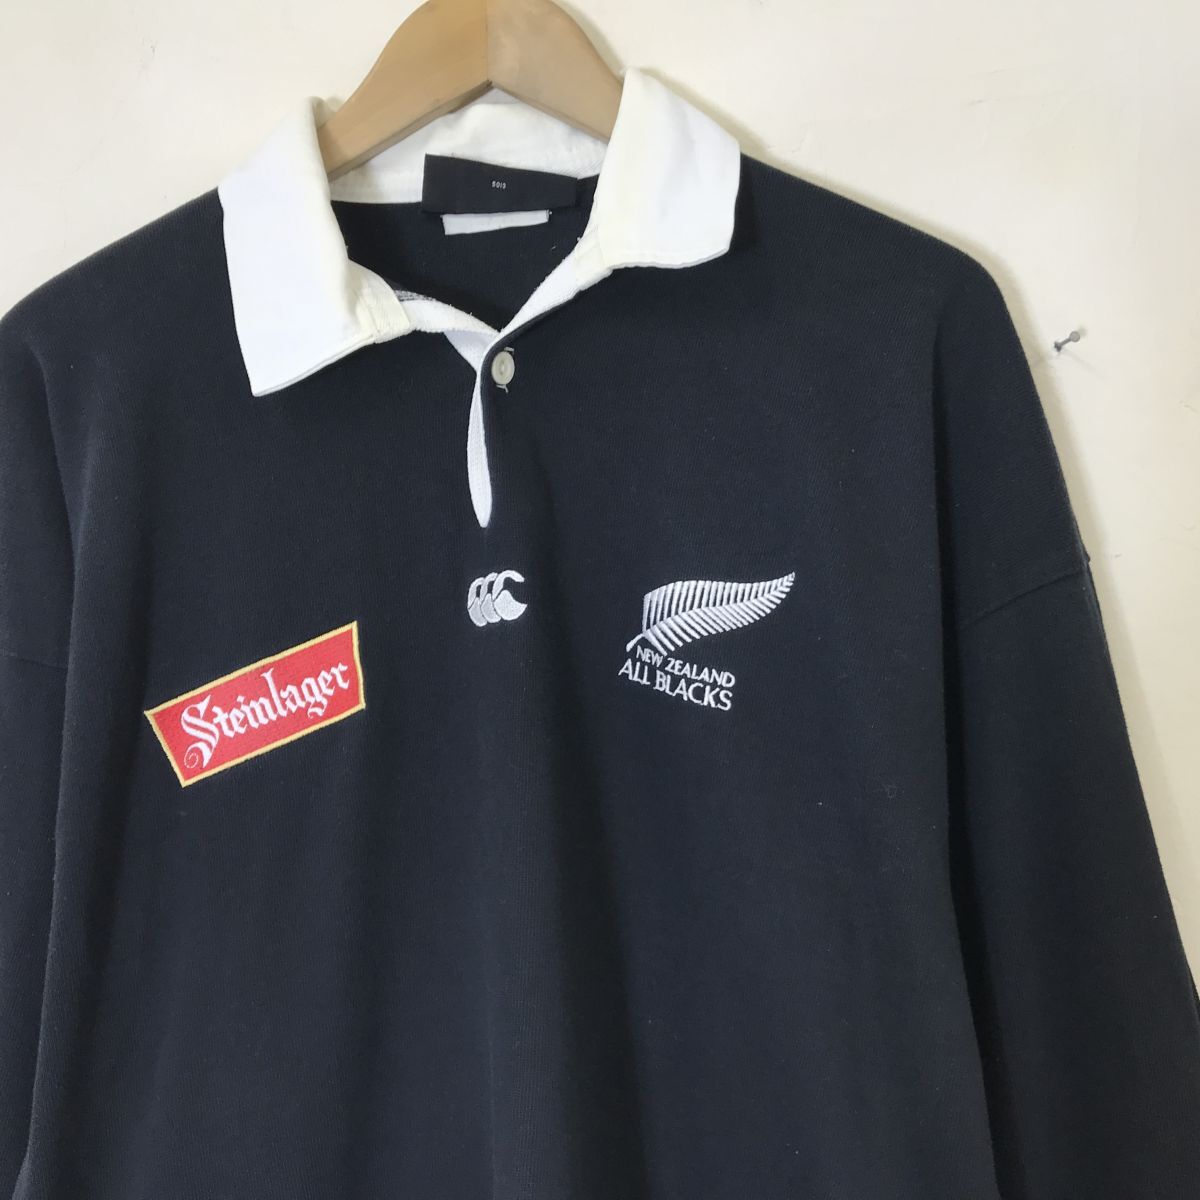 G509-N*old* CANTERBURY canterbury Rugger shirt long sleeve Logo embroidery NEW ZEALAND ALL BLACKS rugby *sizeL black cotton 